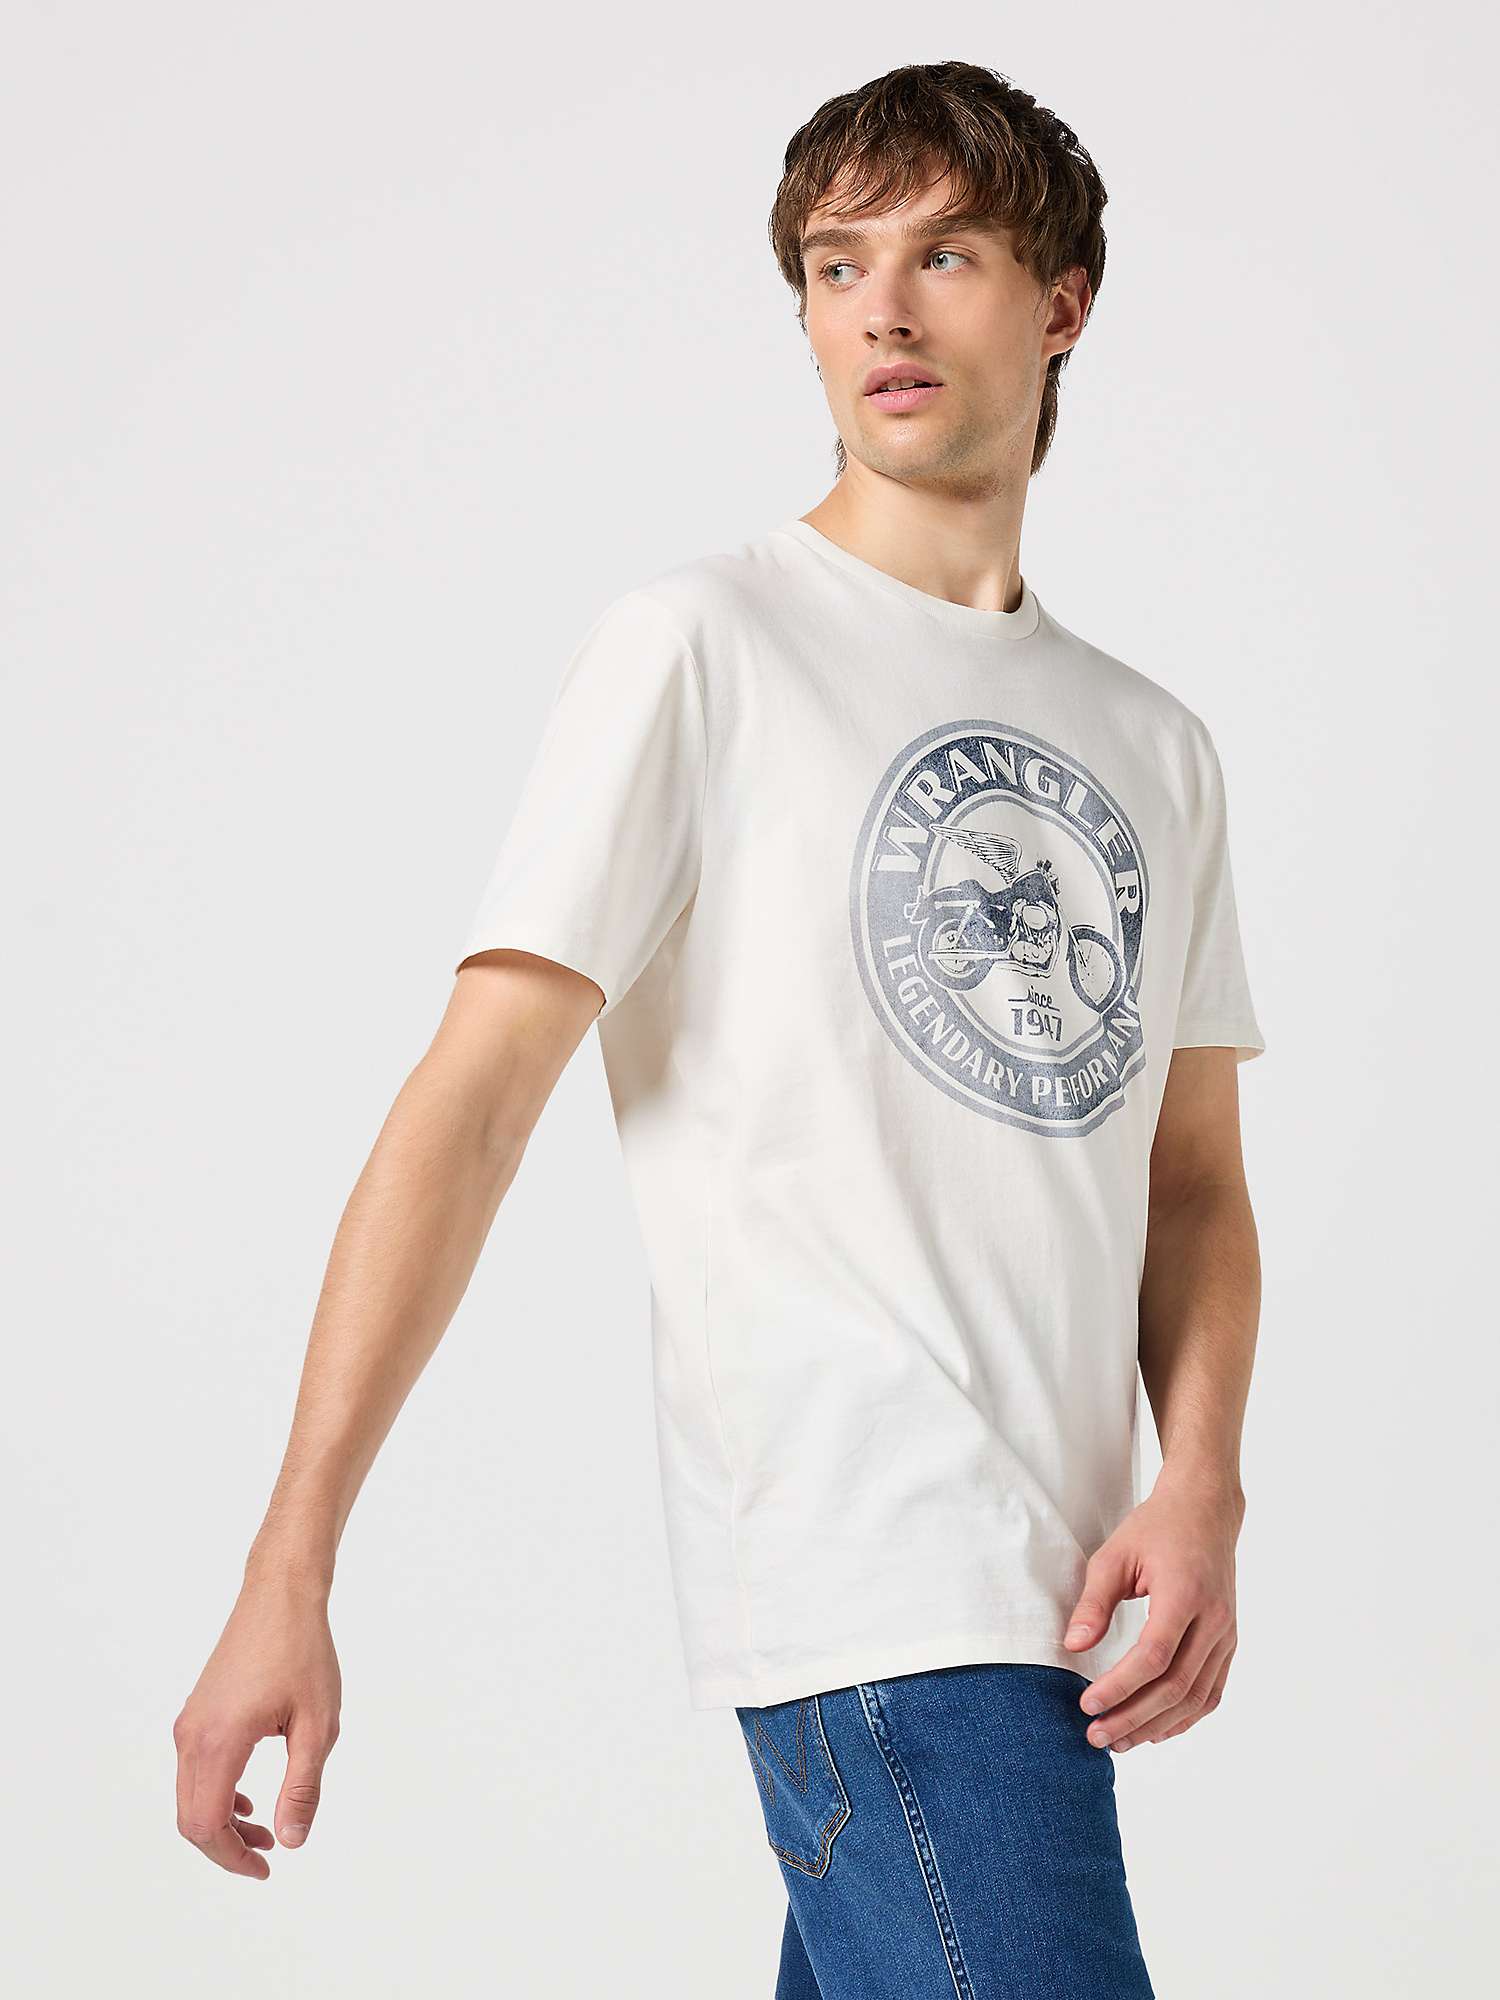 Buy Wrangler Americana T-Shirt Online at johnlewis.com